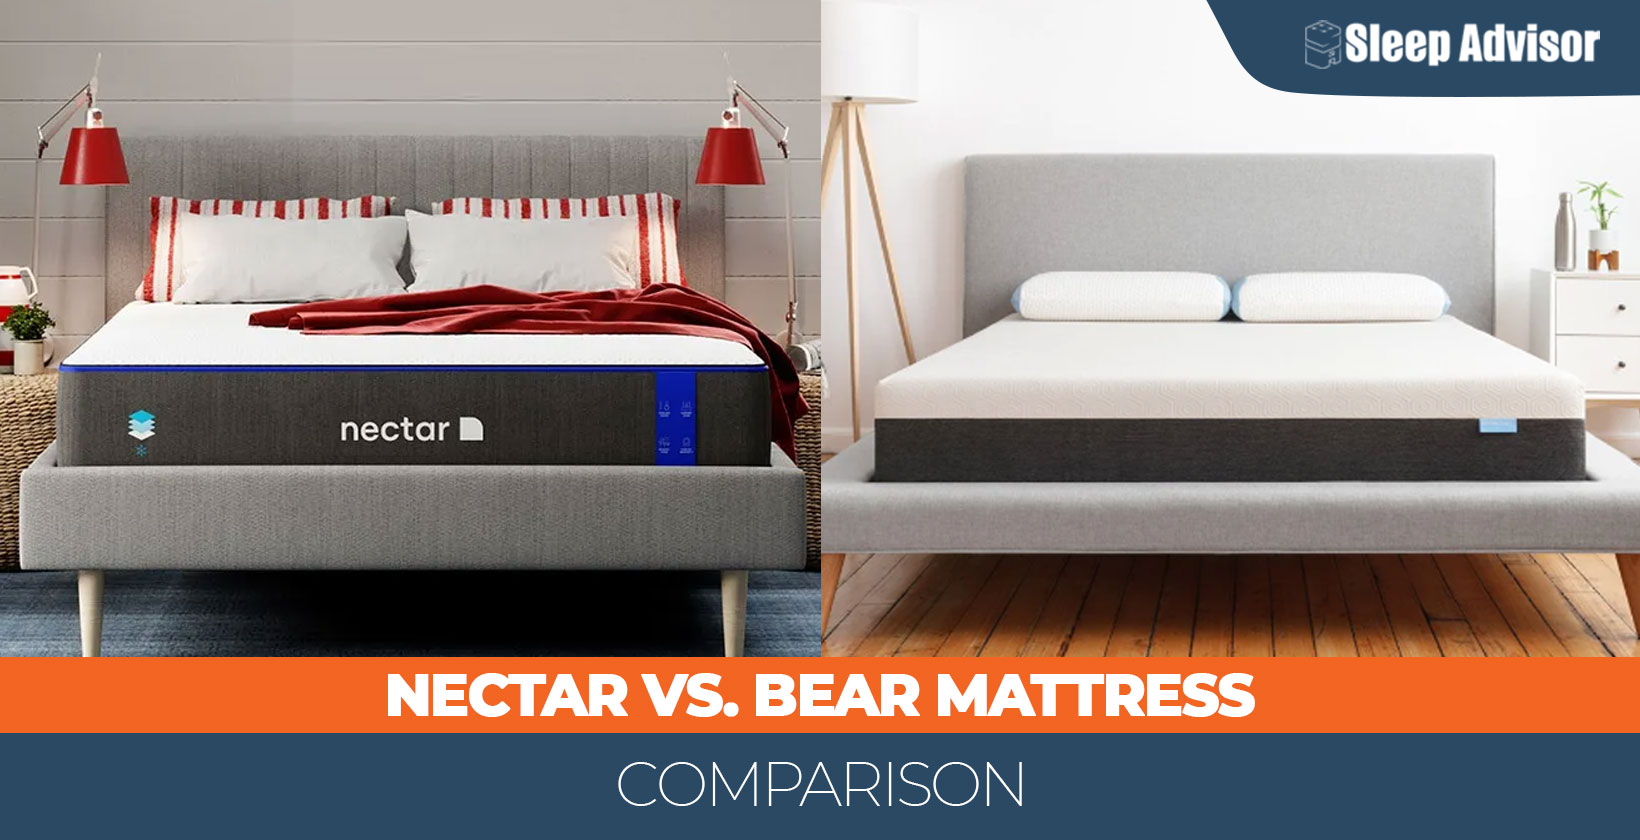 Nectar vs Bear mattress comparison